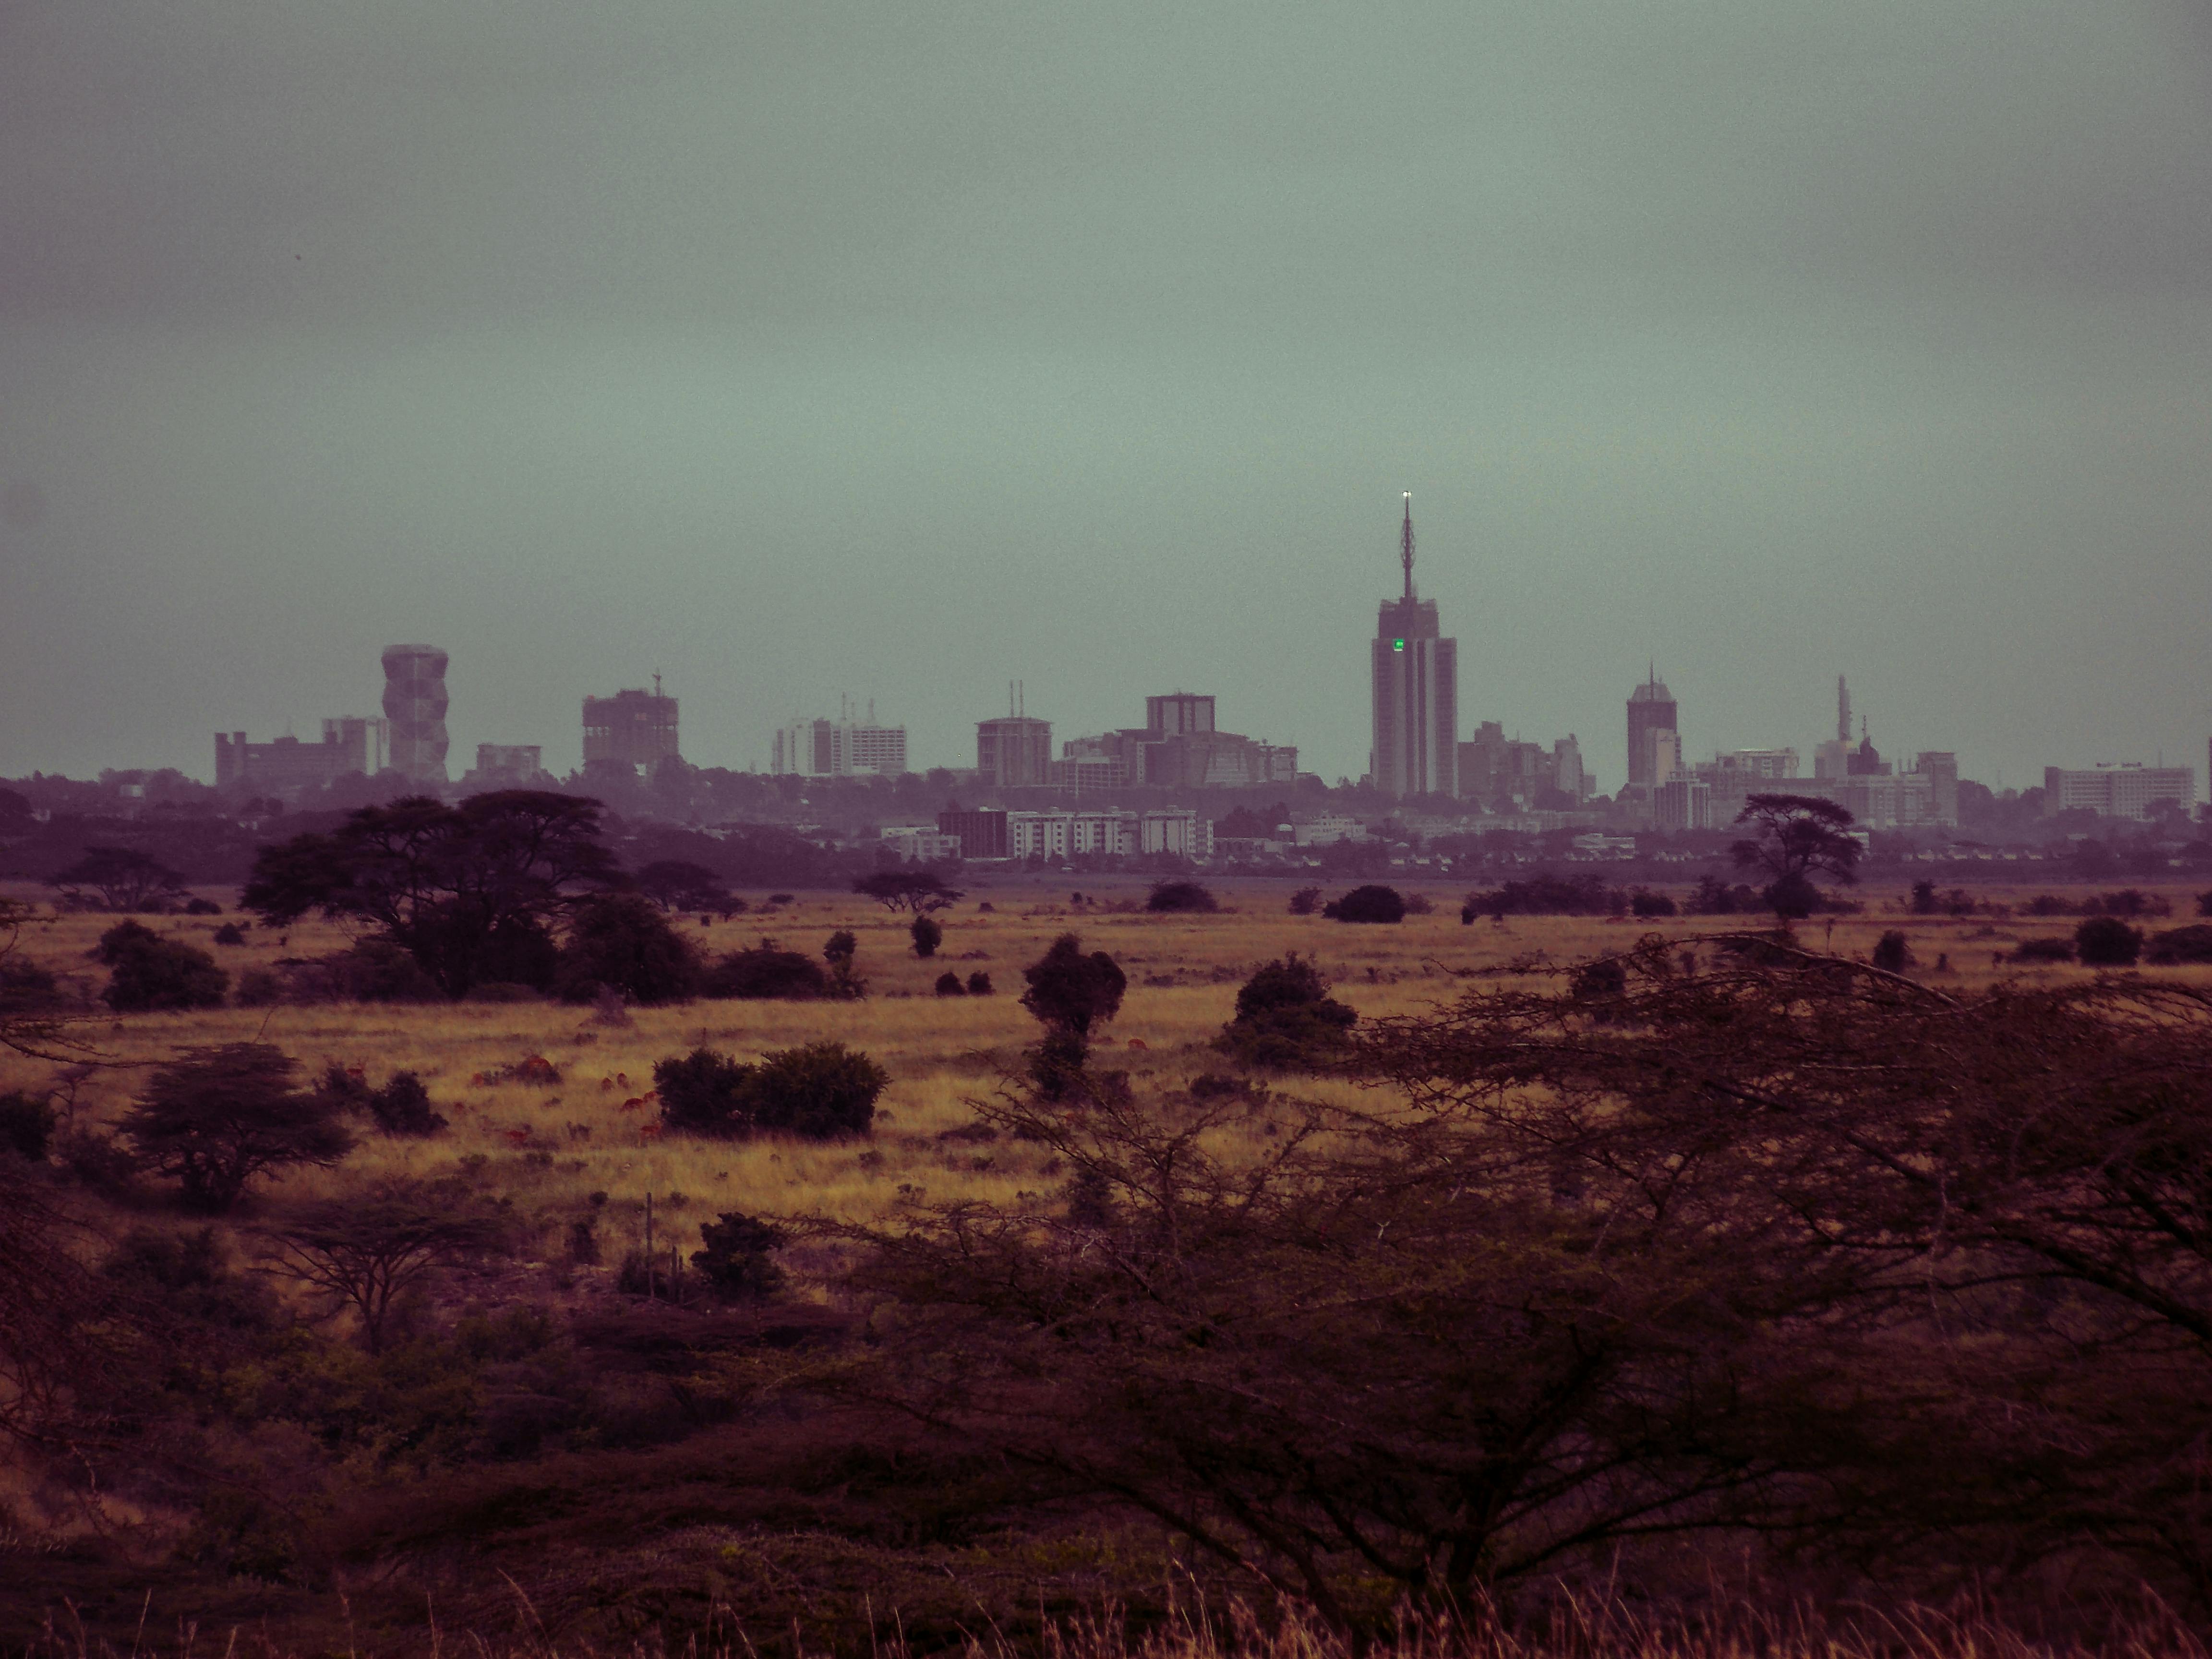 Free stock photo of The City Of Nairobi Kenya